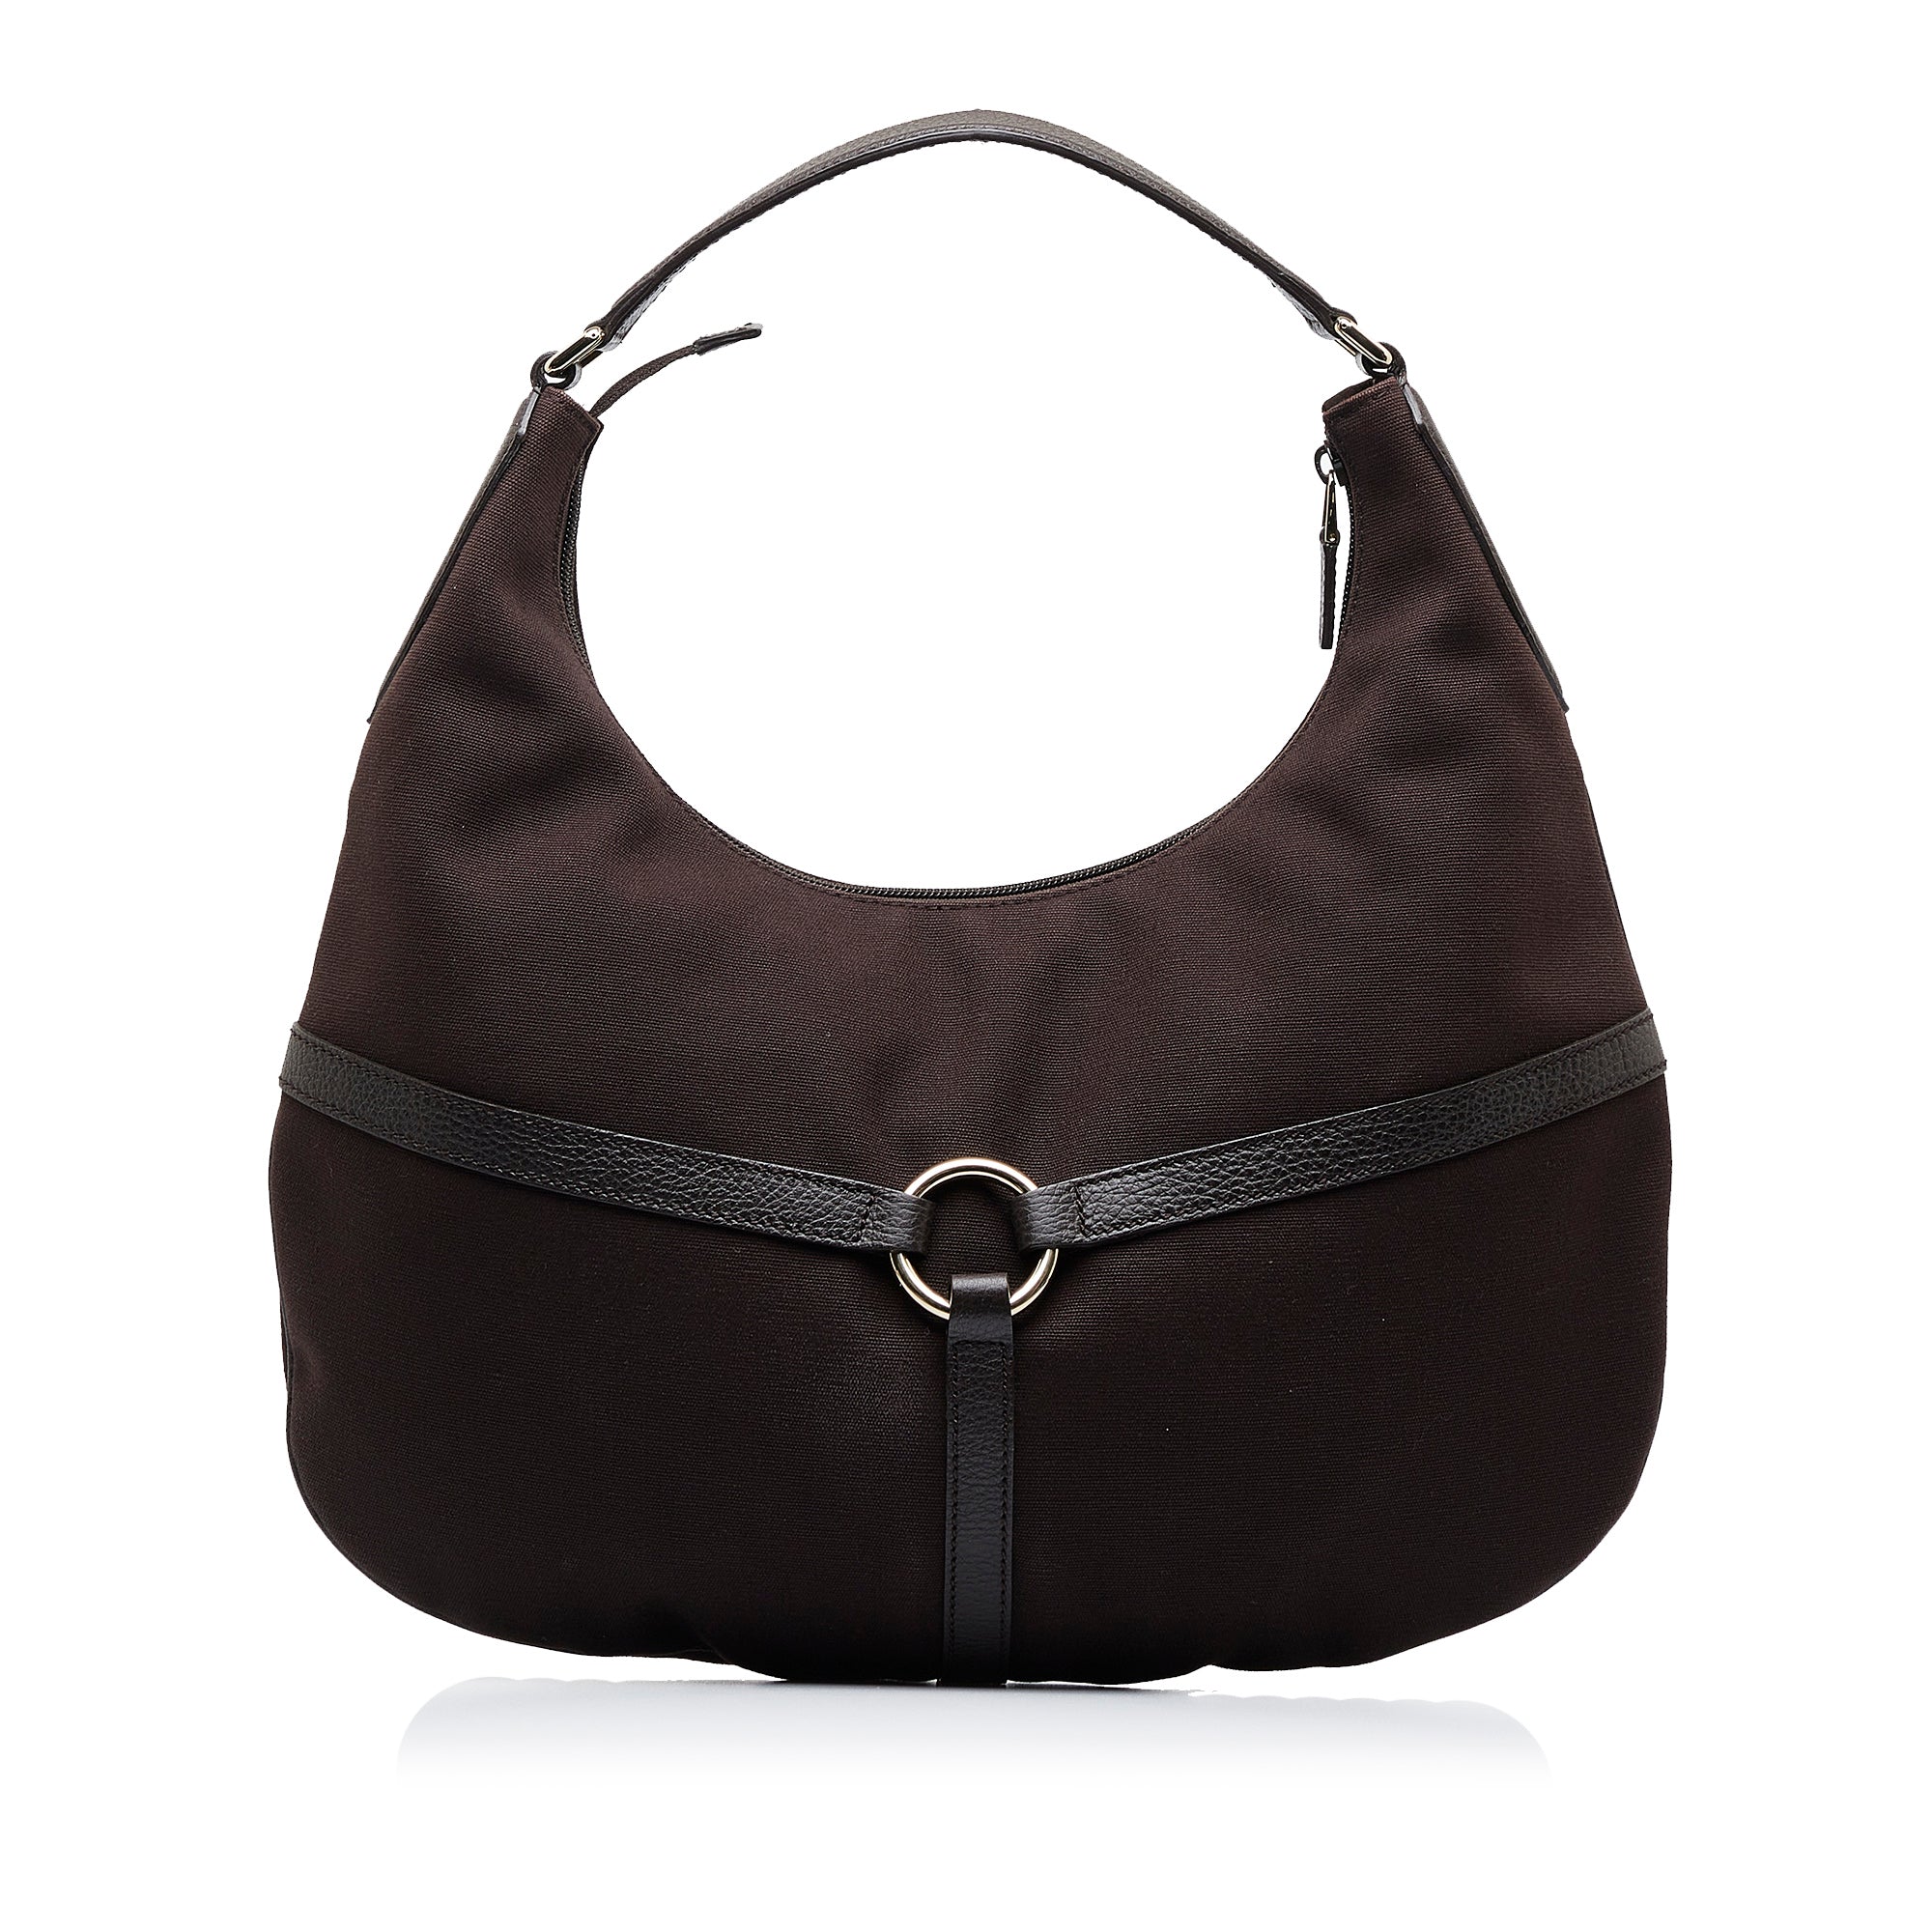 Brown Gucci Reins Hobo Bag – Designer Revival